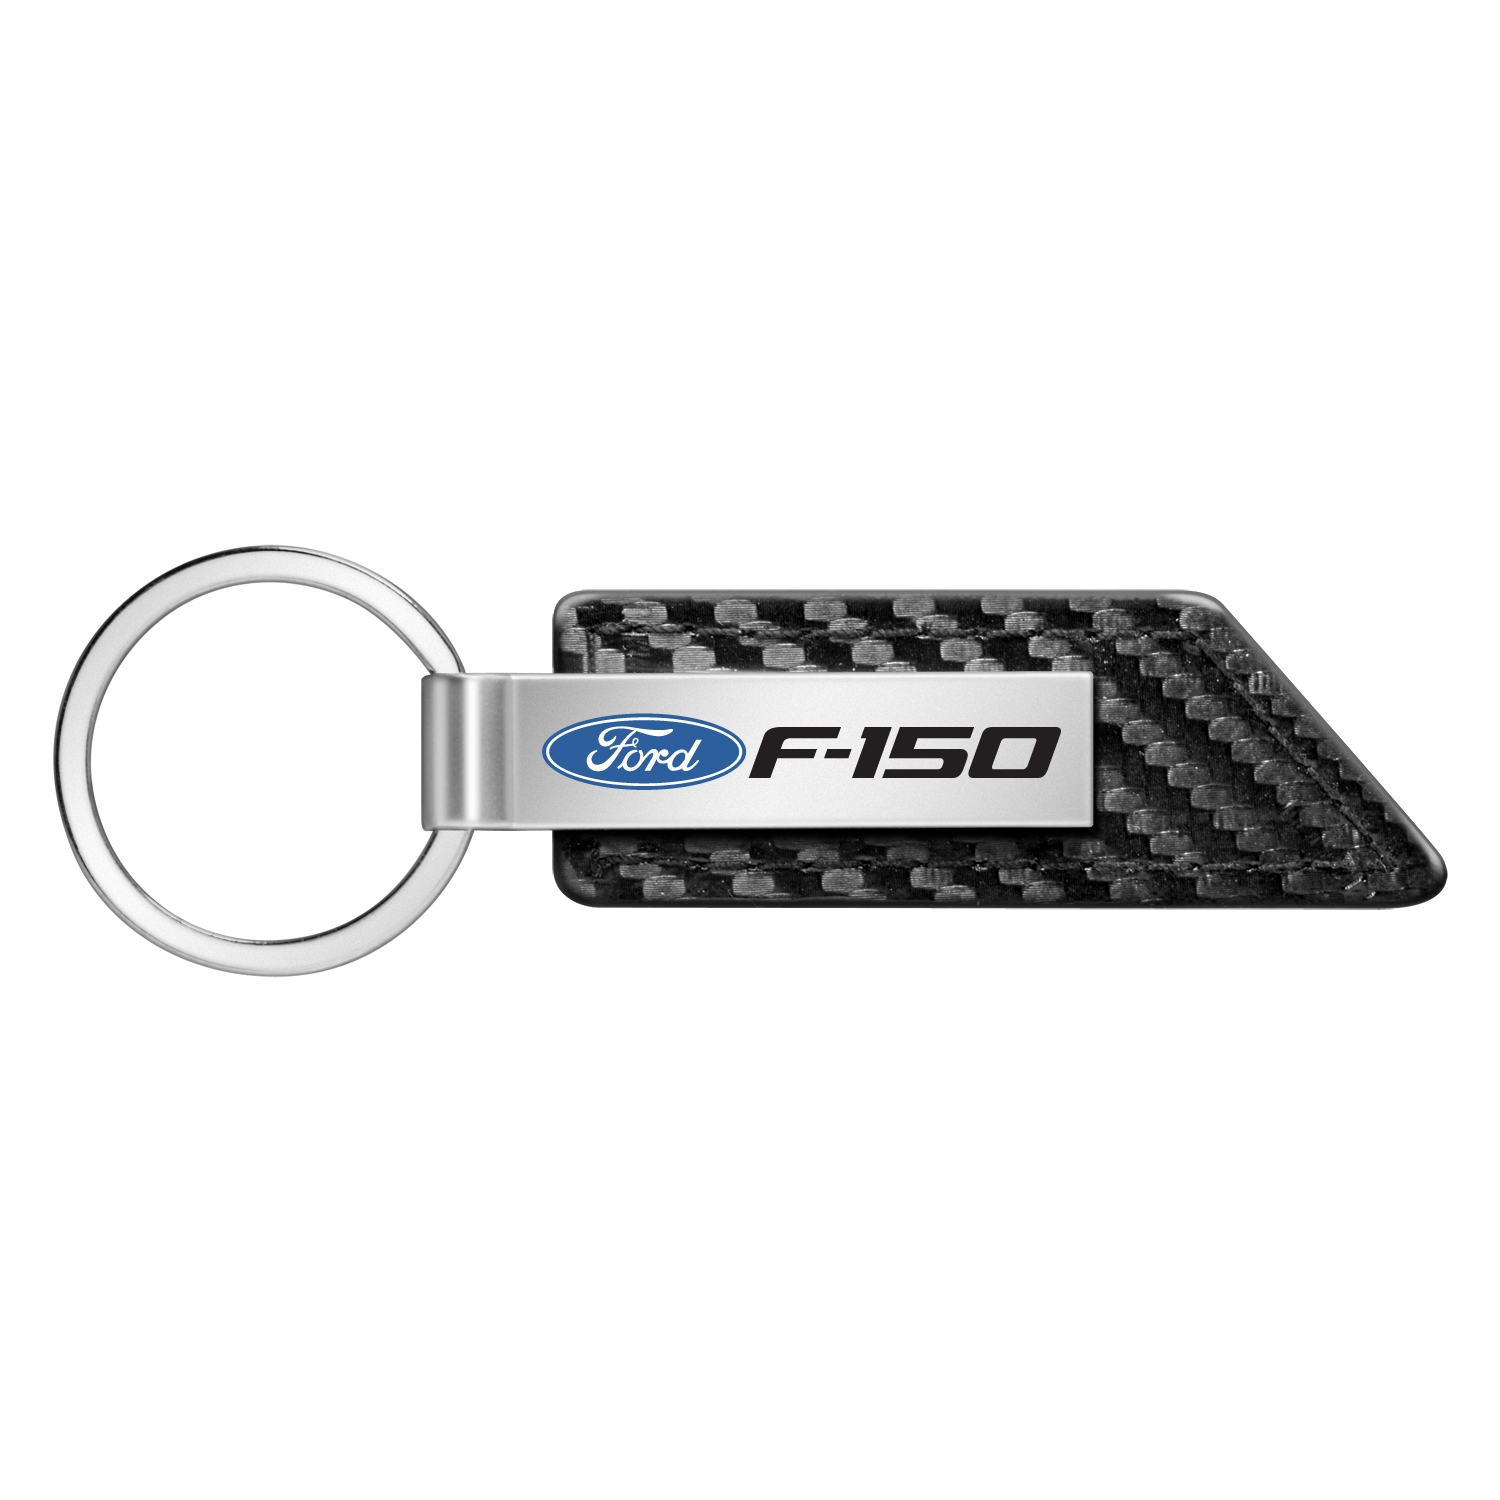 Ford F-150 Carbon Fiber Texture Black Leather Strap Key Chain